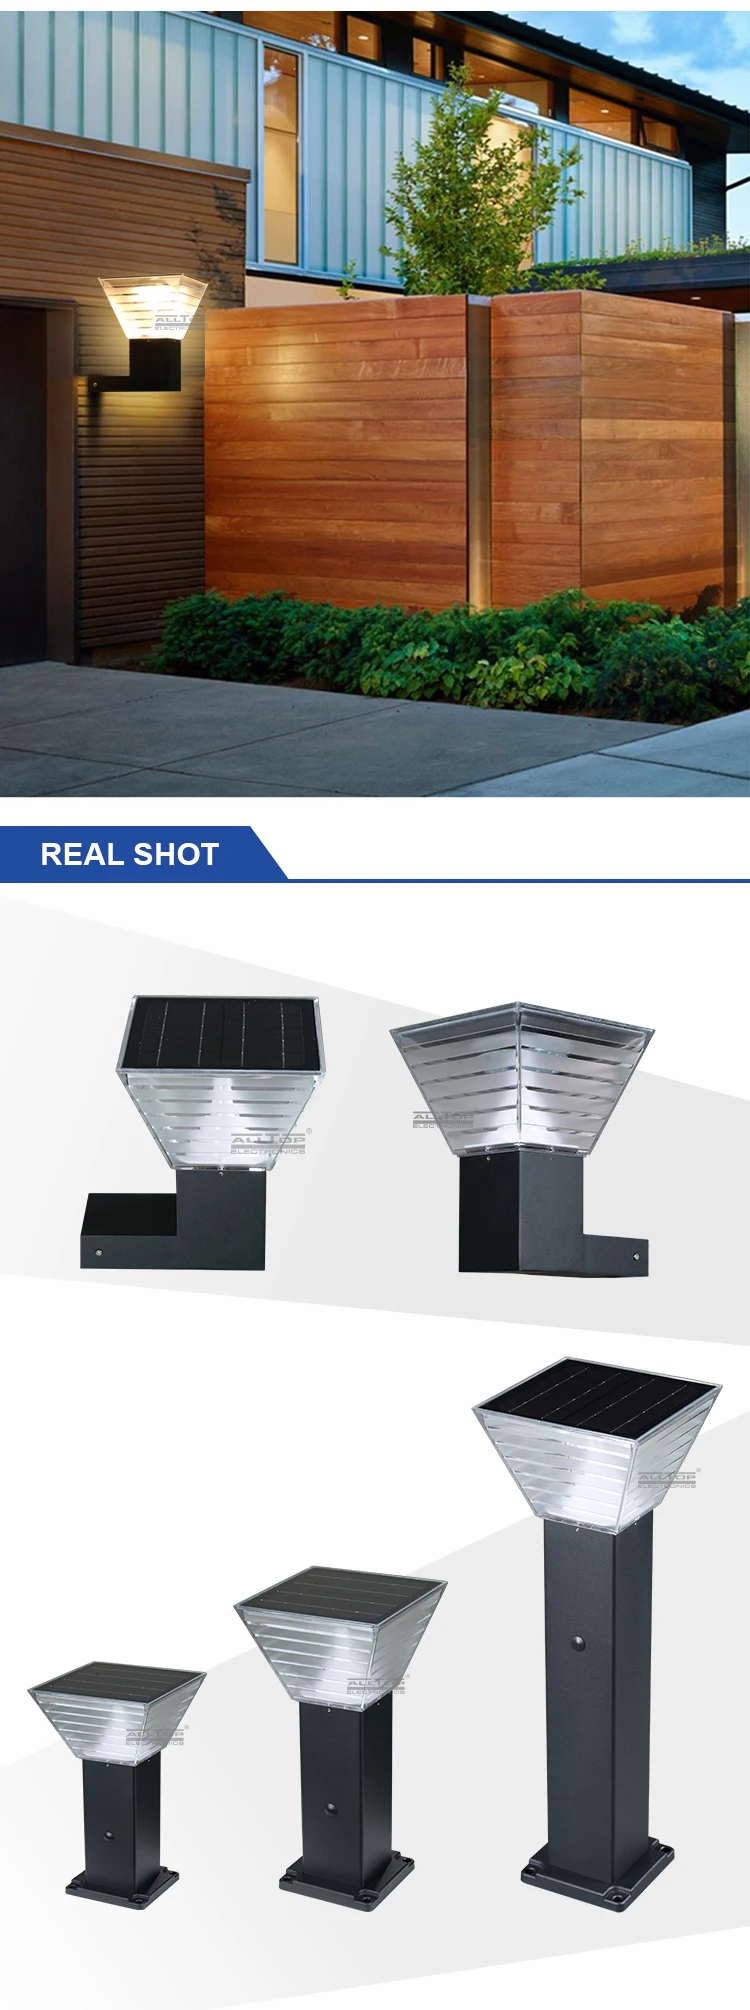 ALLTOP New product high quality 5watt ip65 outdoor waterproof aluminium solar led garden light